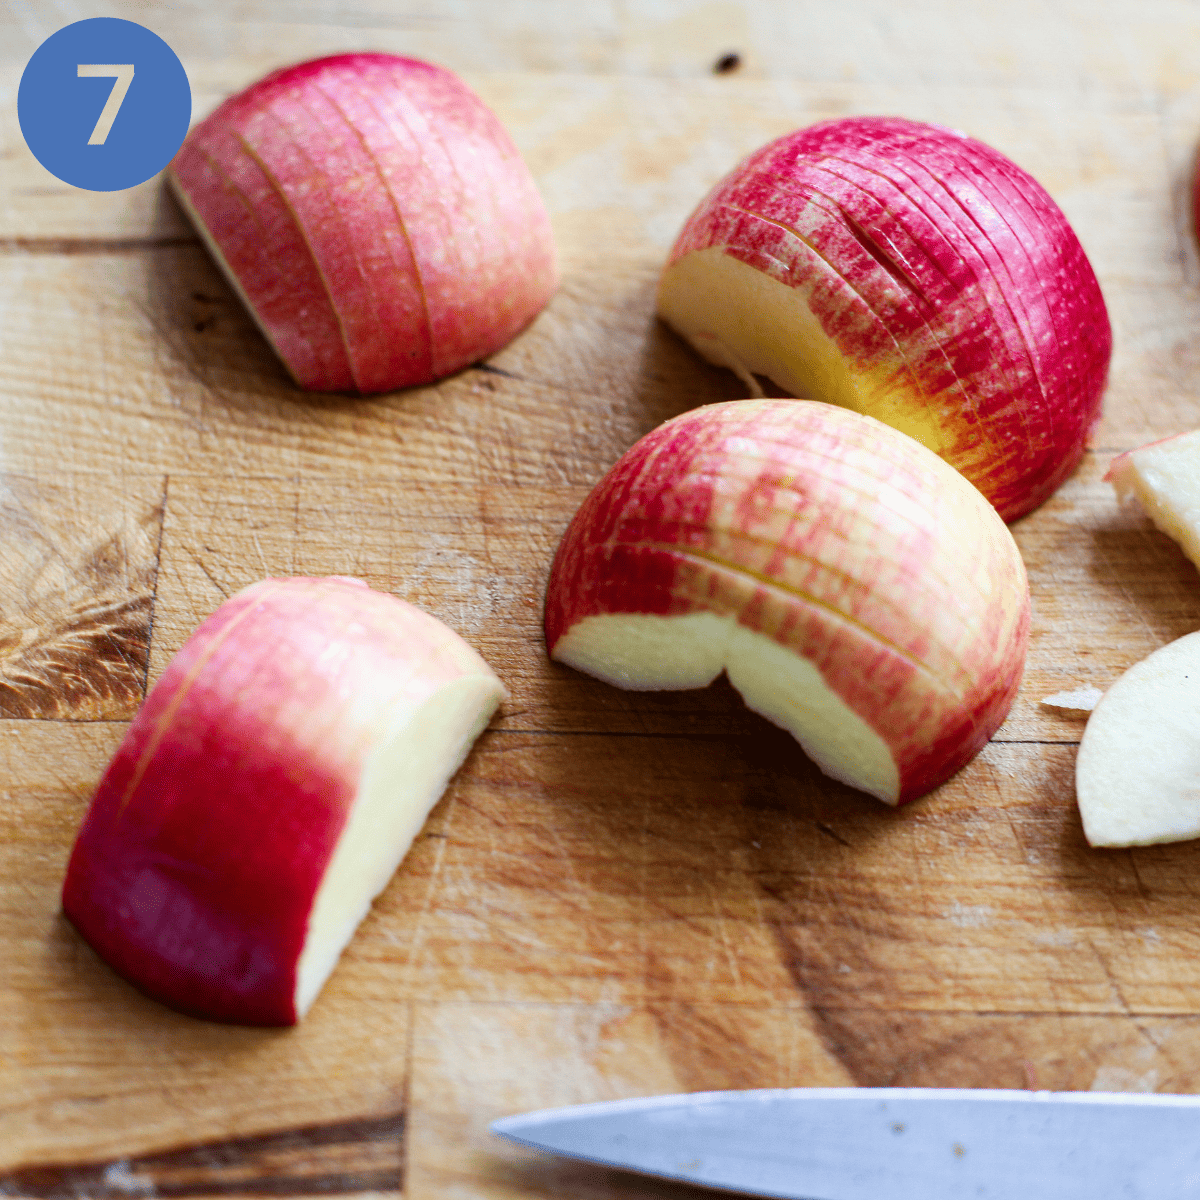 Slicing apples for apple cake.